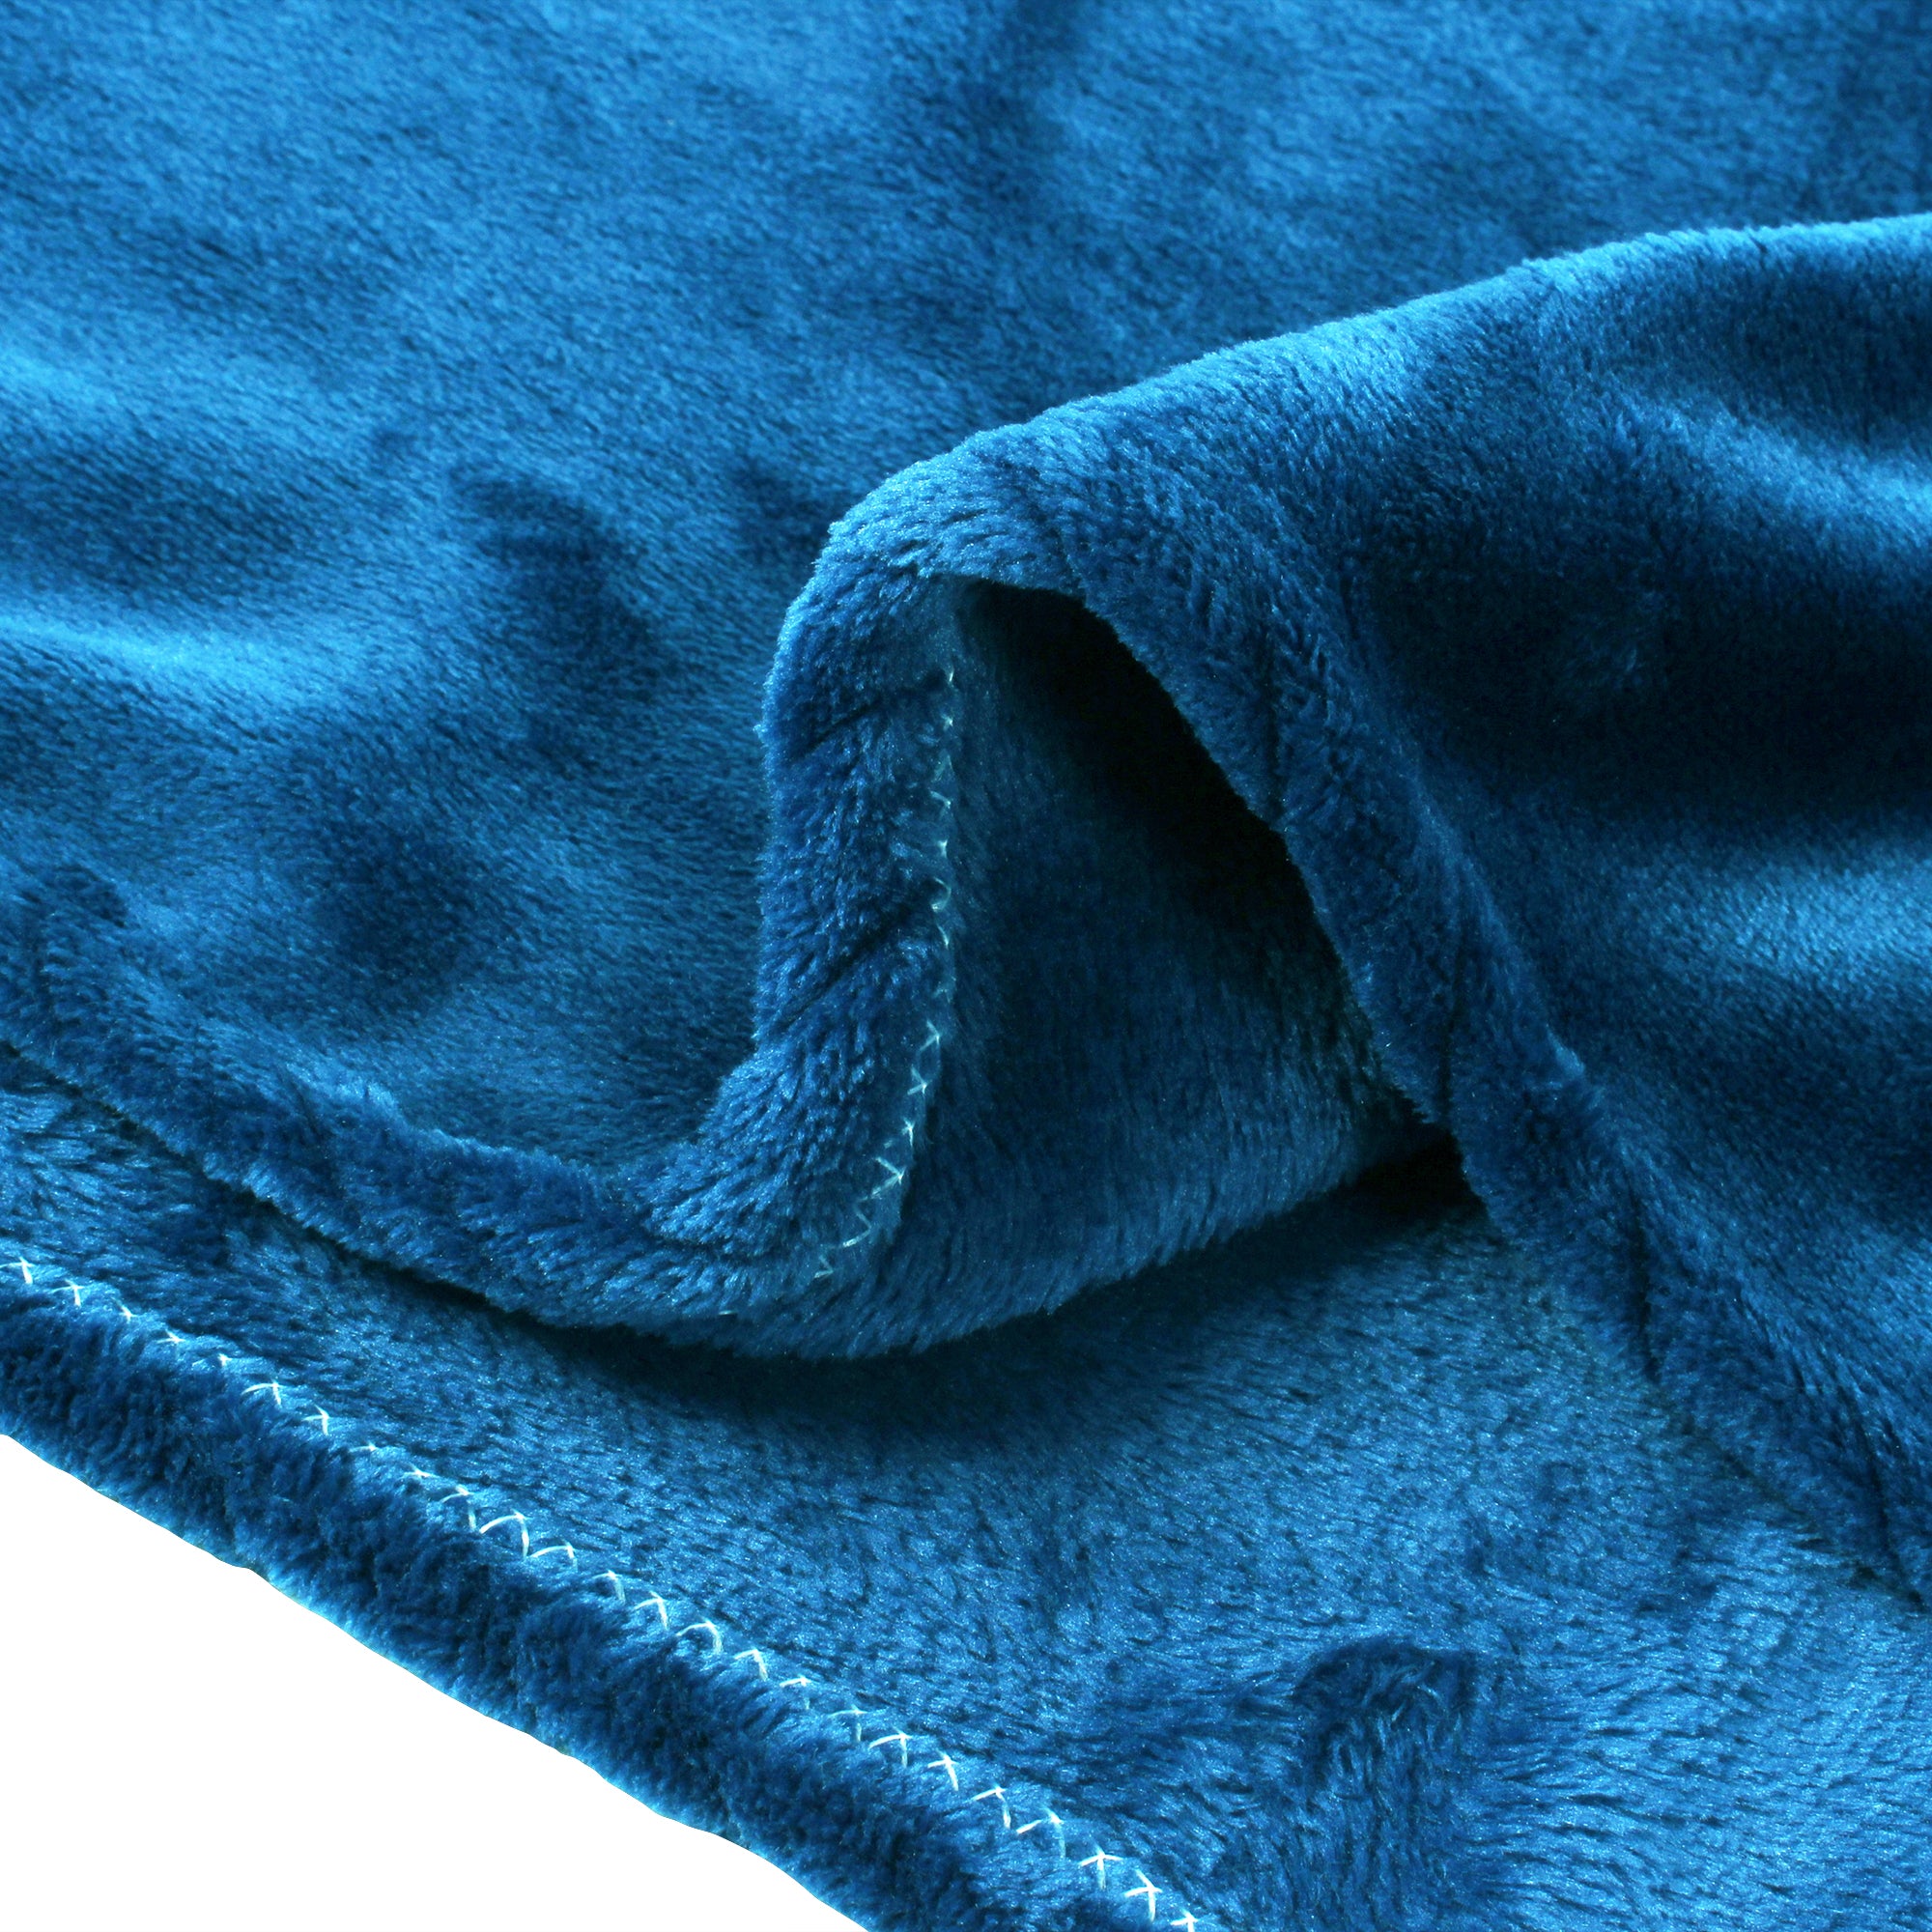 Premium Peacock Blue Double Flannel Blanket